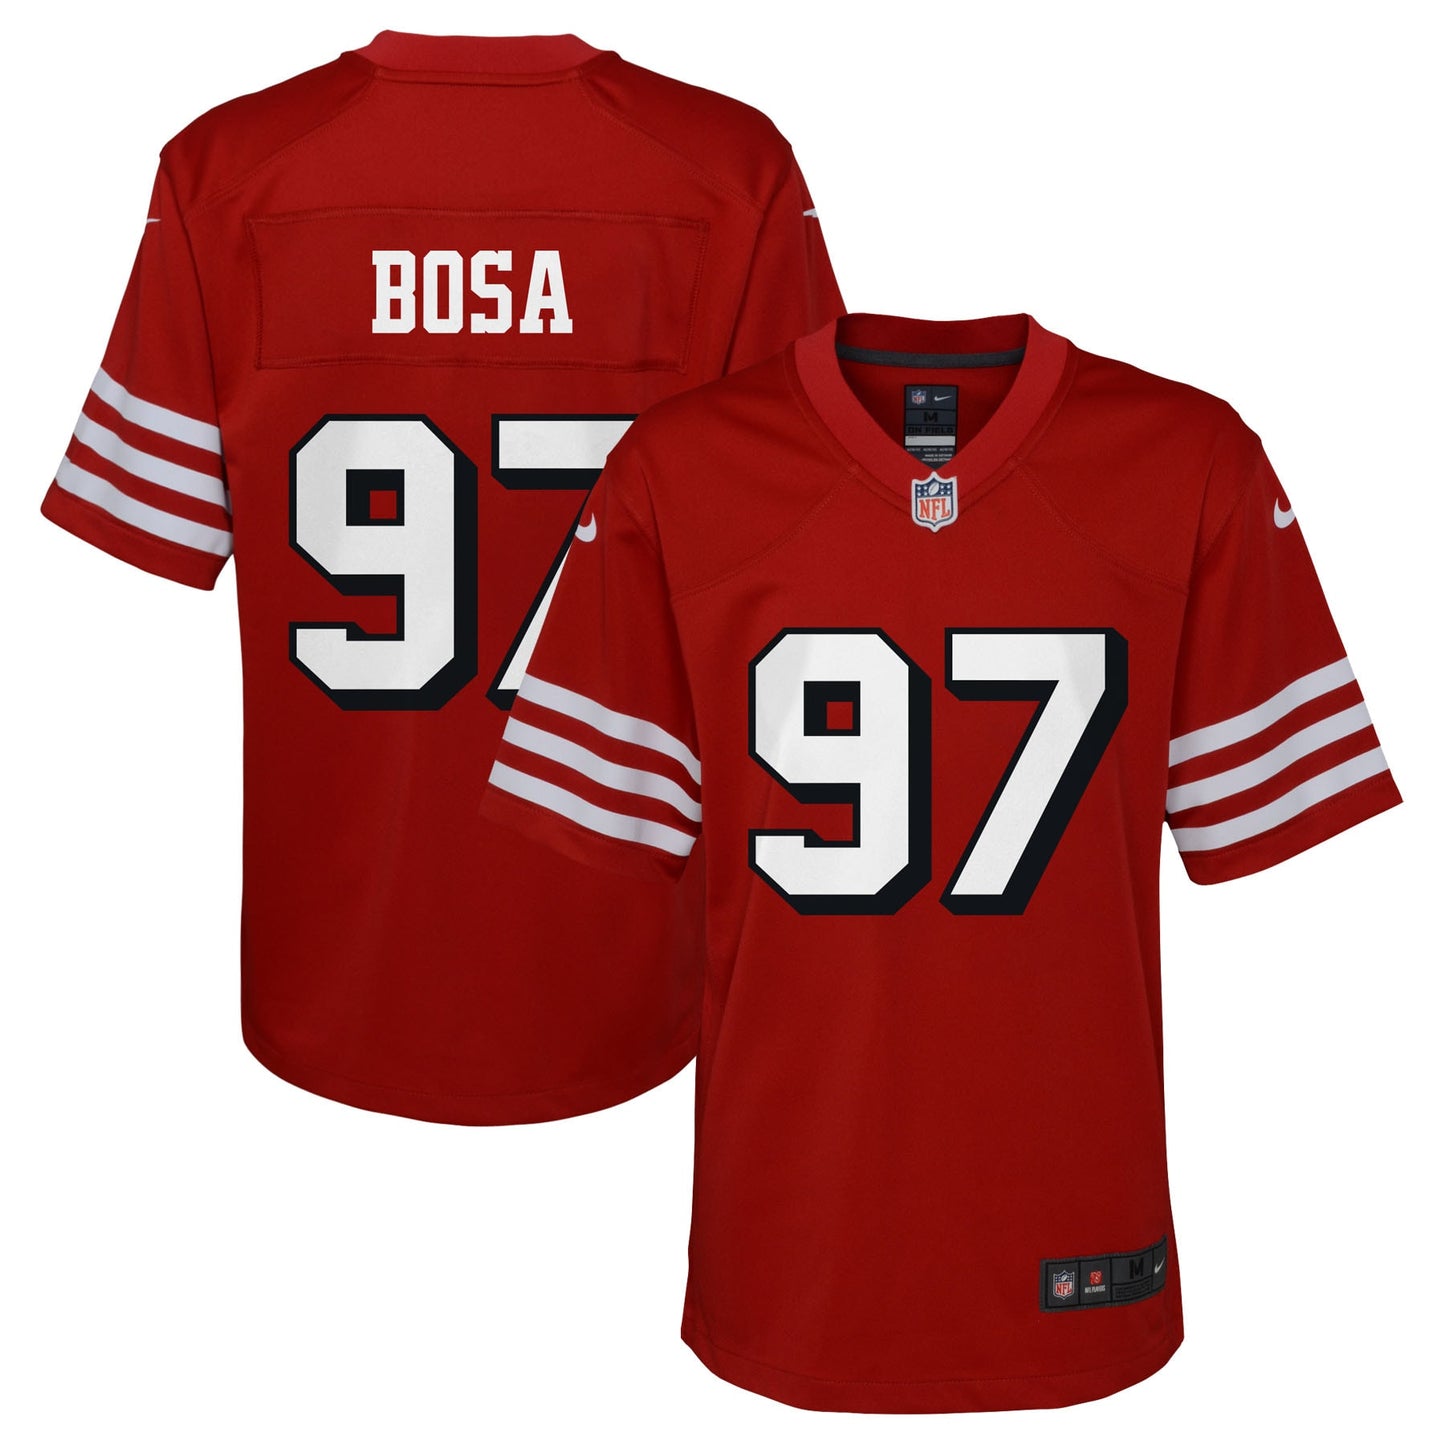 Nick Bosa San Francisco 49ers Nike Youth Game Jersey - Scarlet